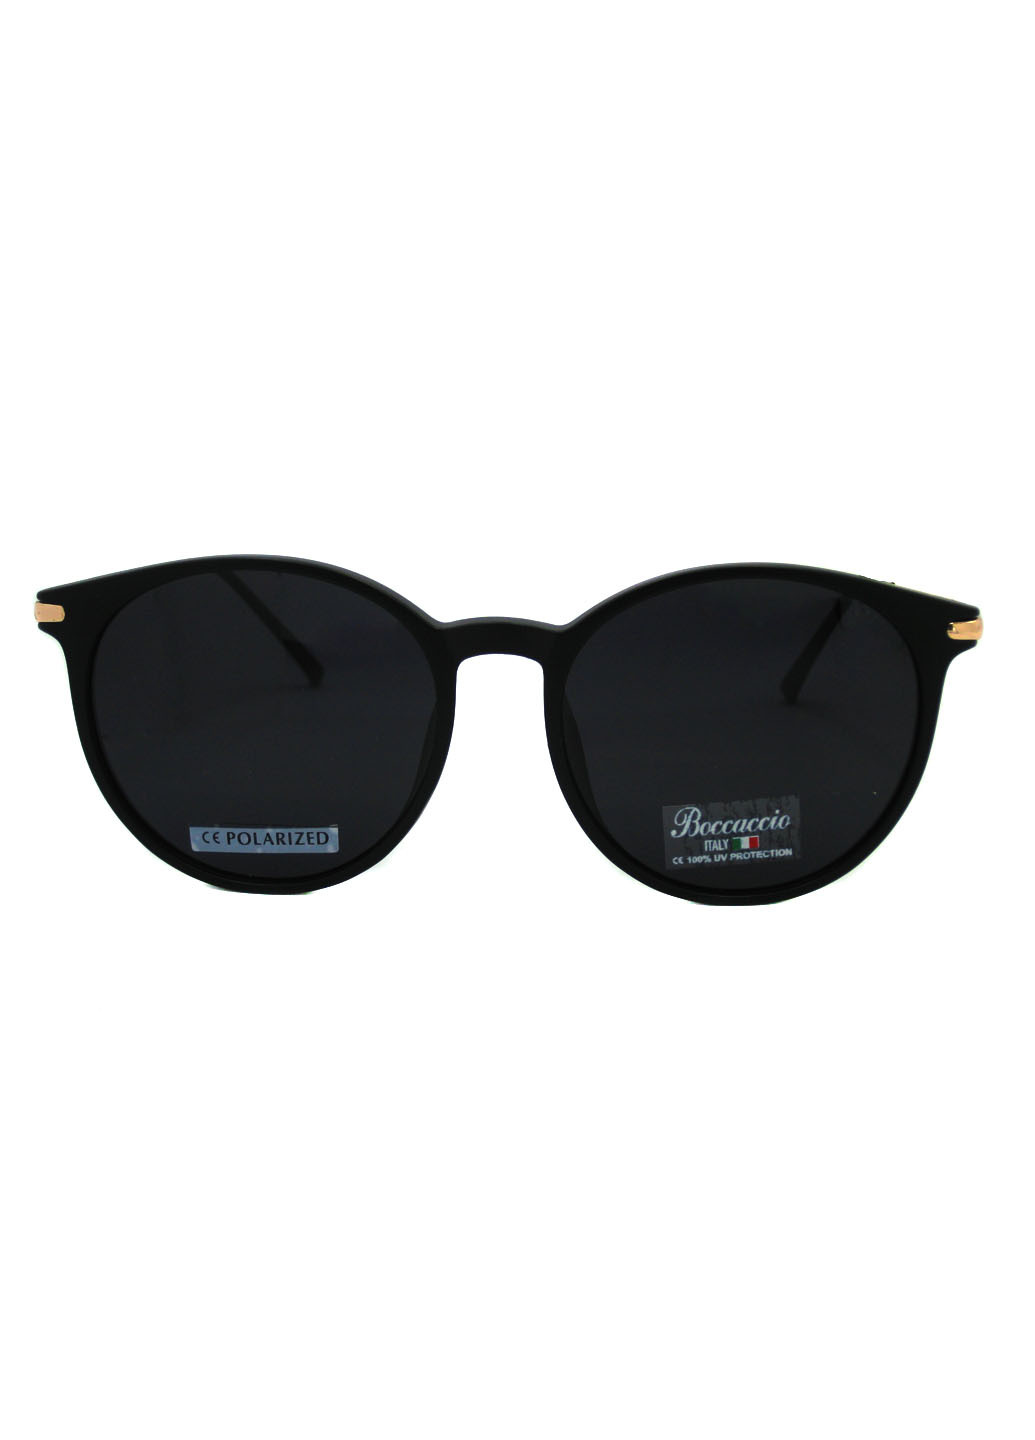 Сонцезахиснi окуляри Boccaccio bcp245 (258845205)